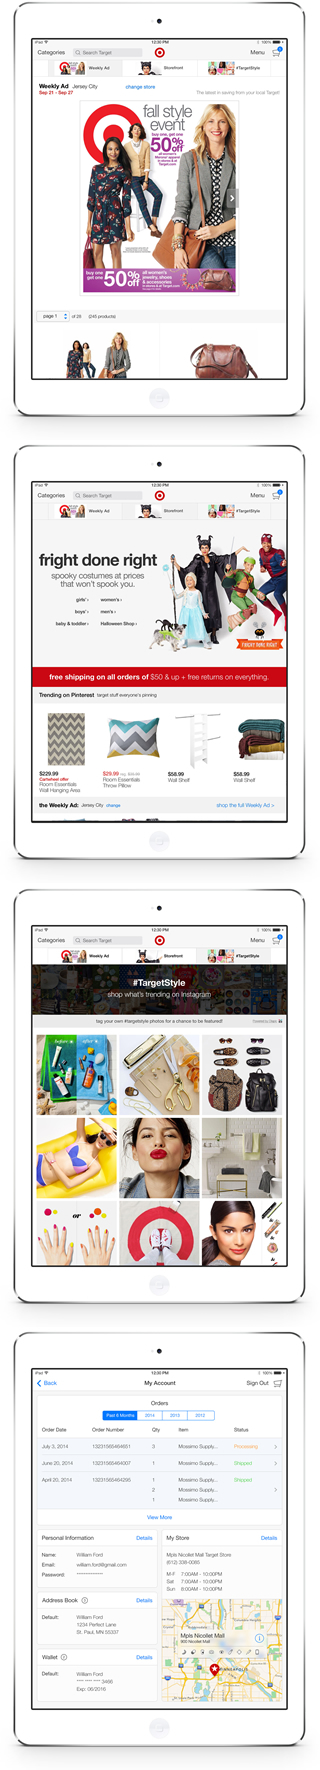 Target mobile app iPad 2014